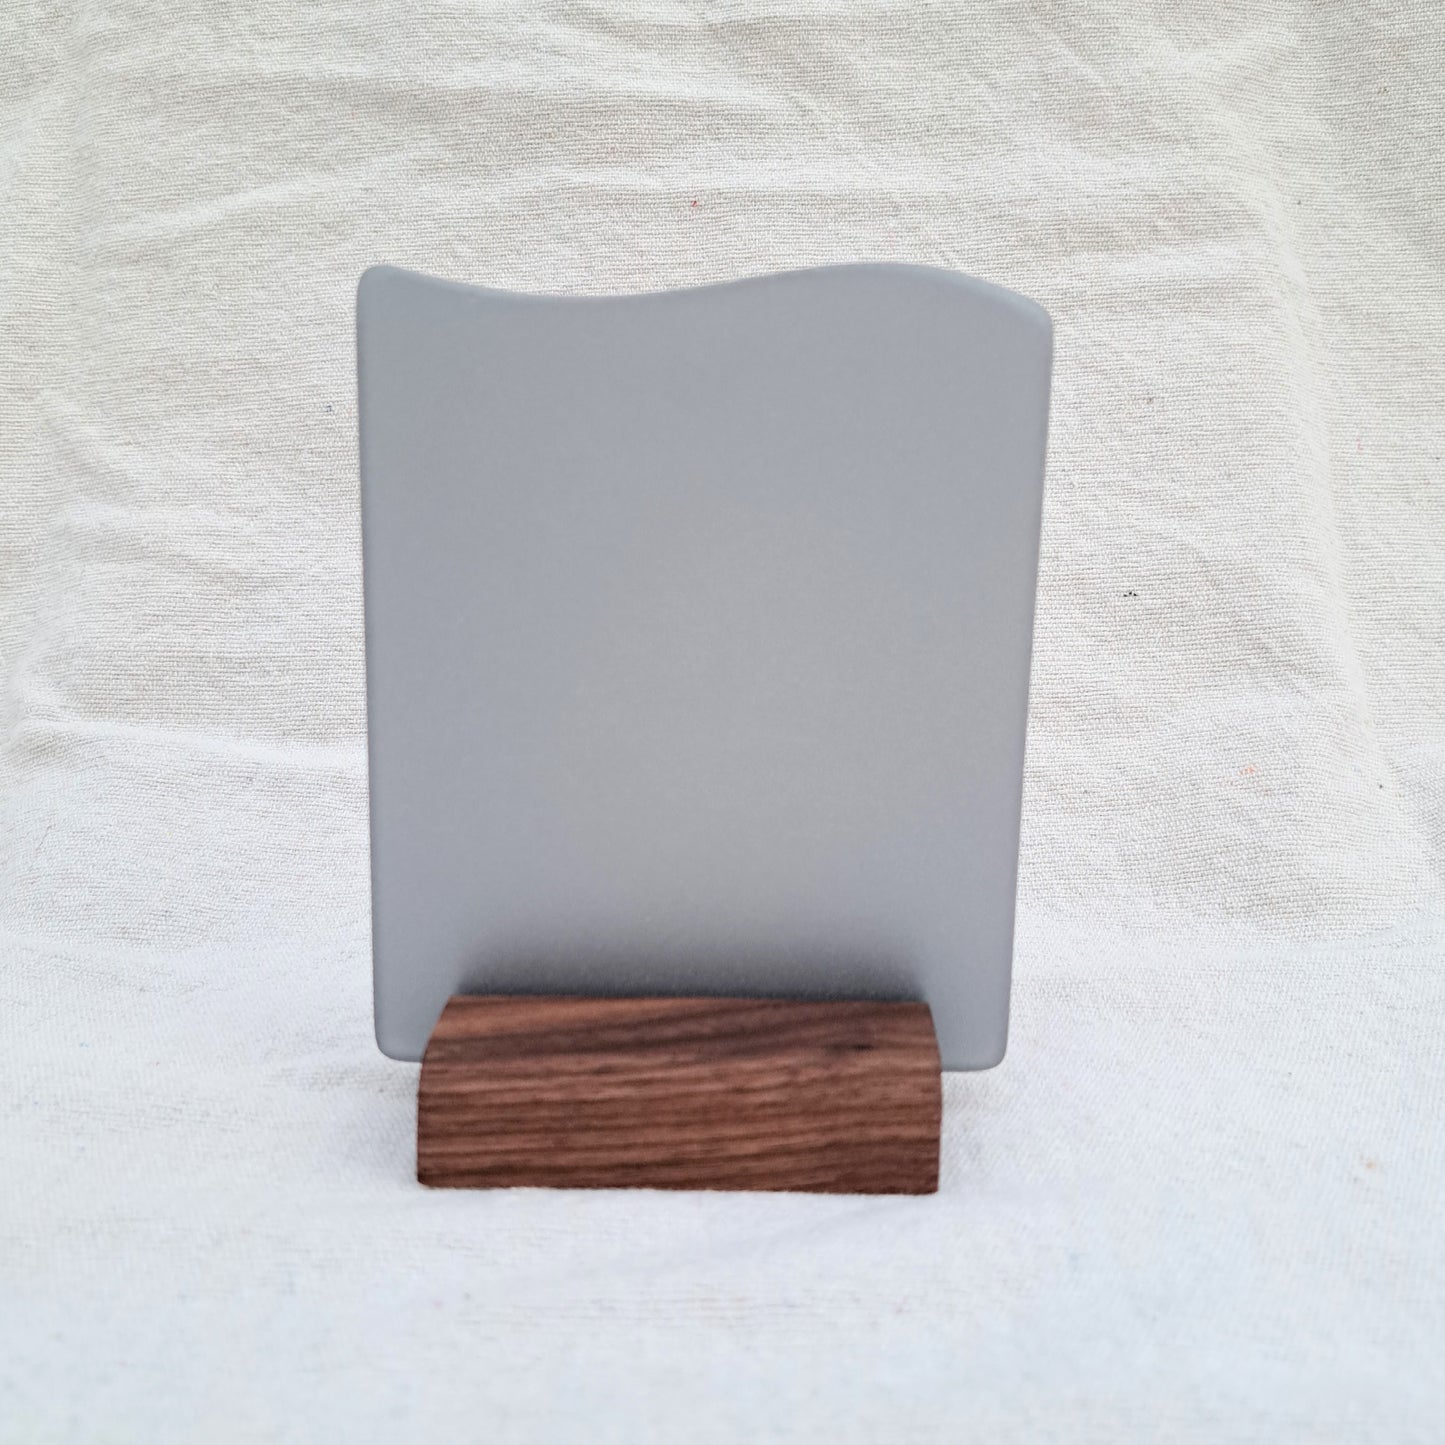 Grey sea glass sign blank - 5x4 inch tumble glass piece